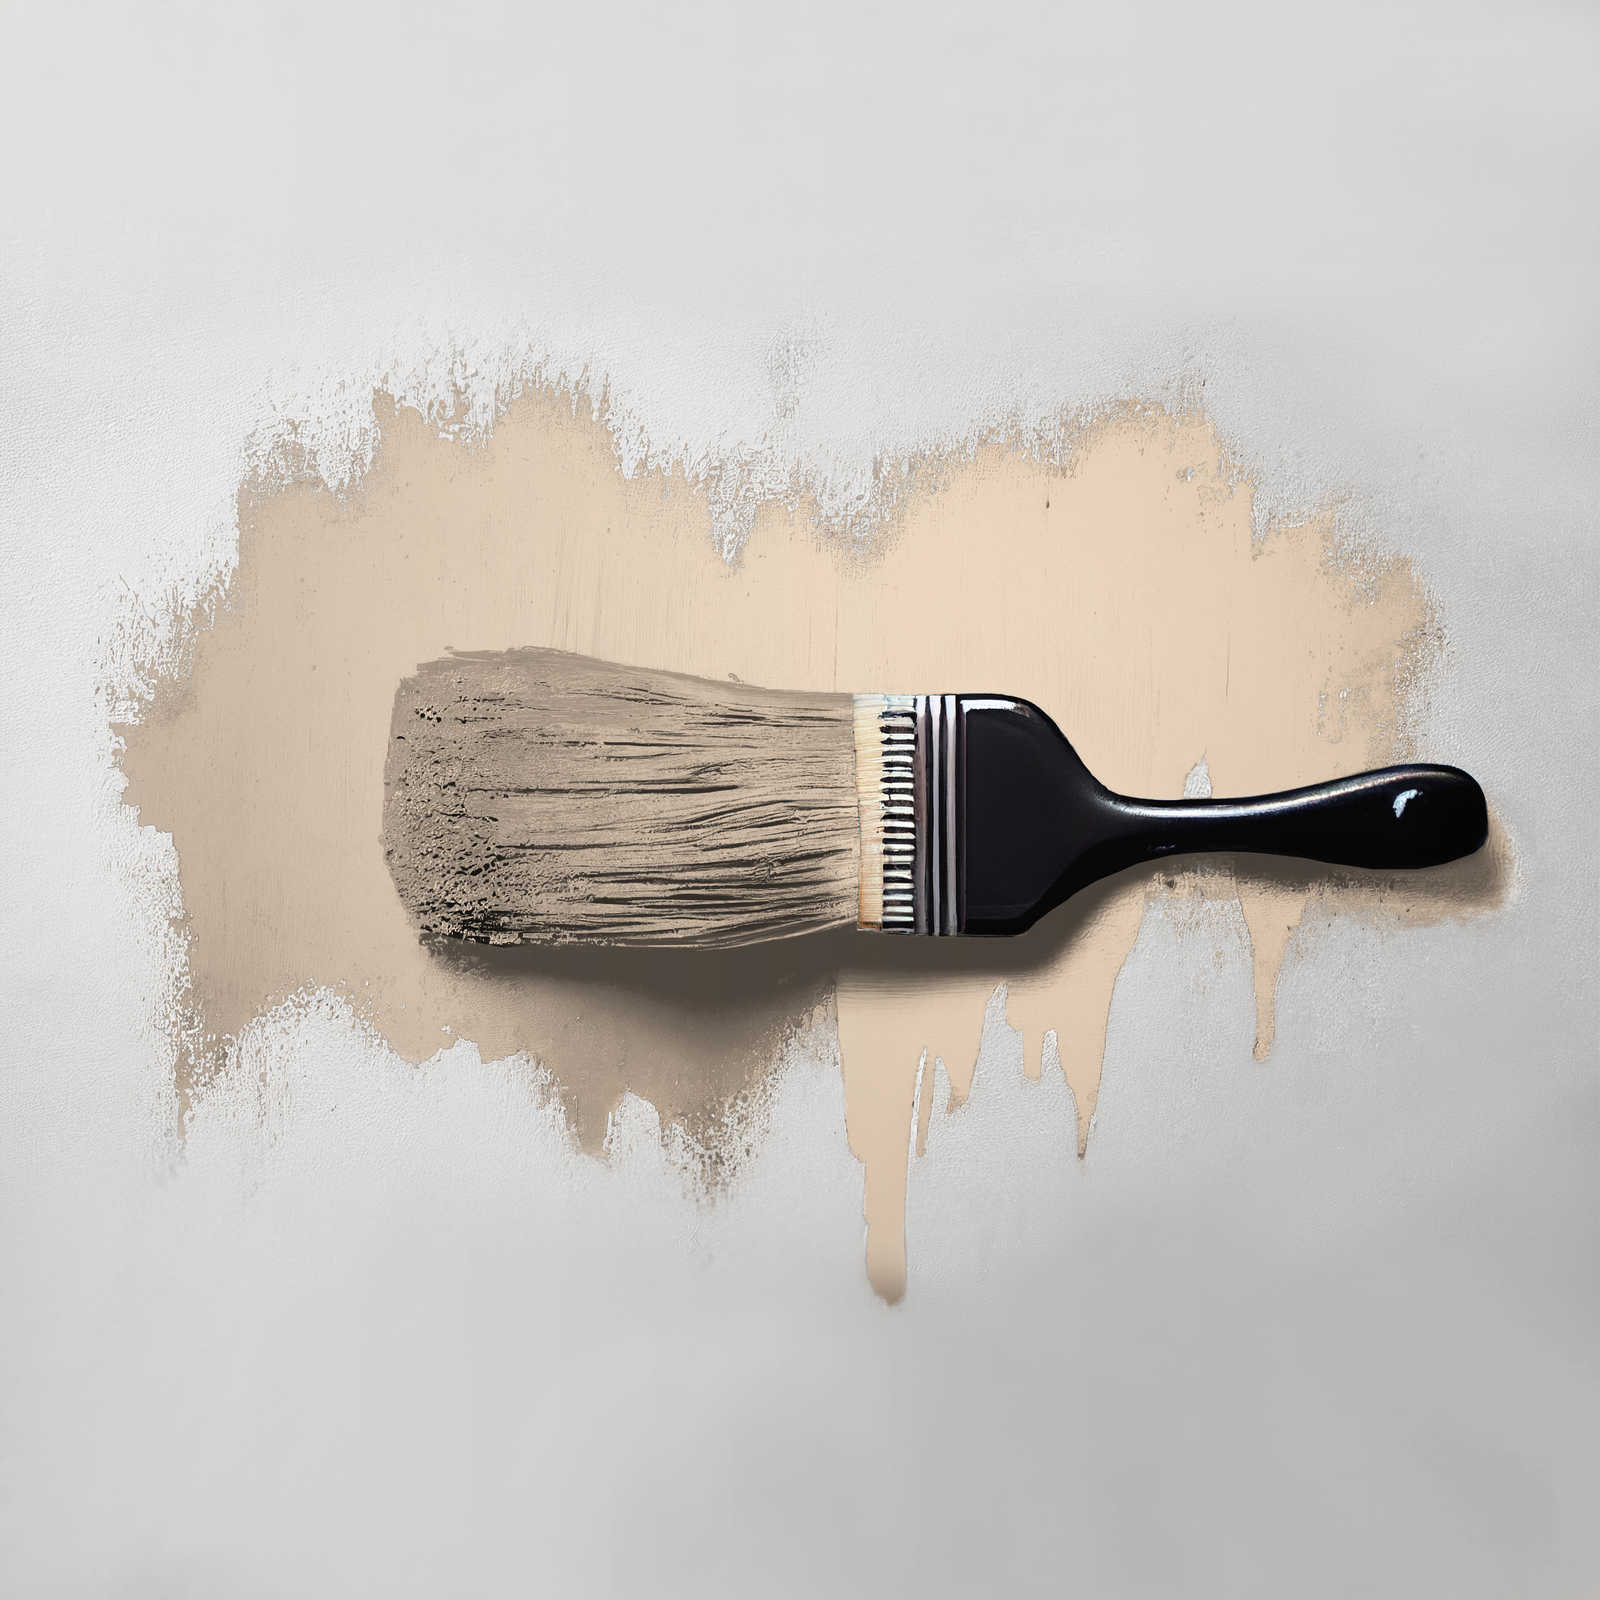             Pittura murale TCK5008 »Humble Hummus« in beige caldo – 2,5 litri
        